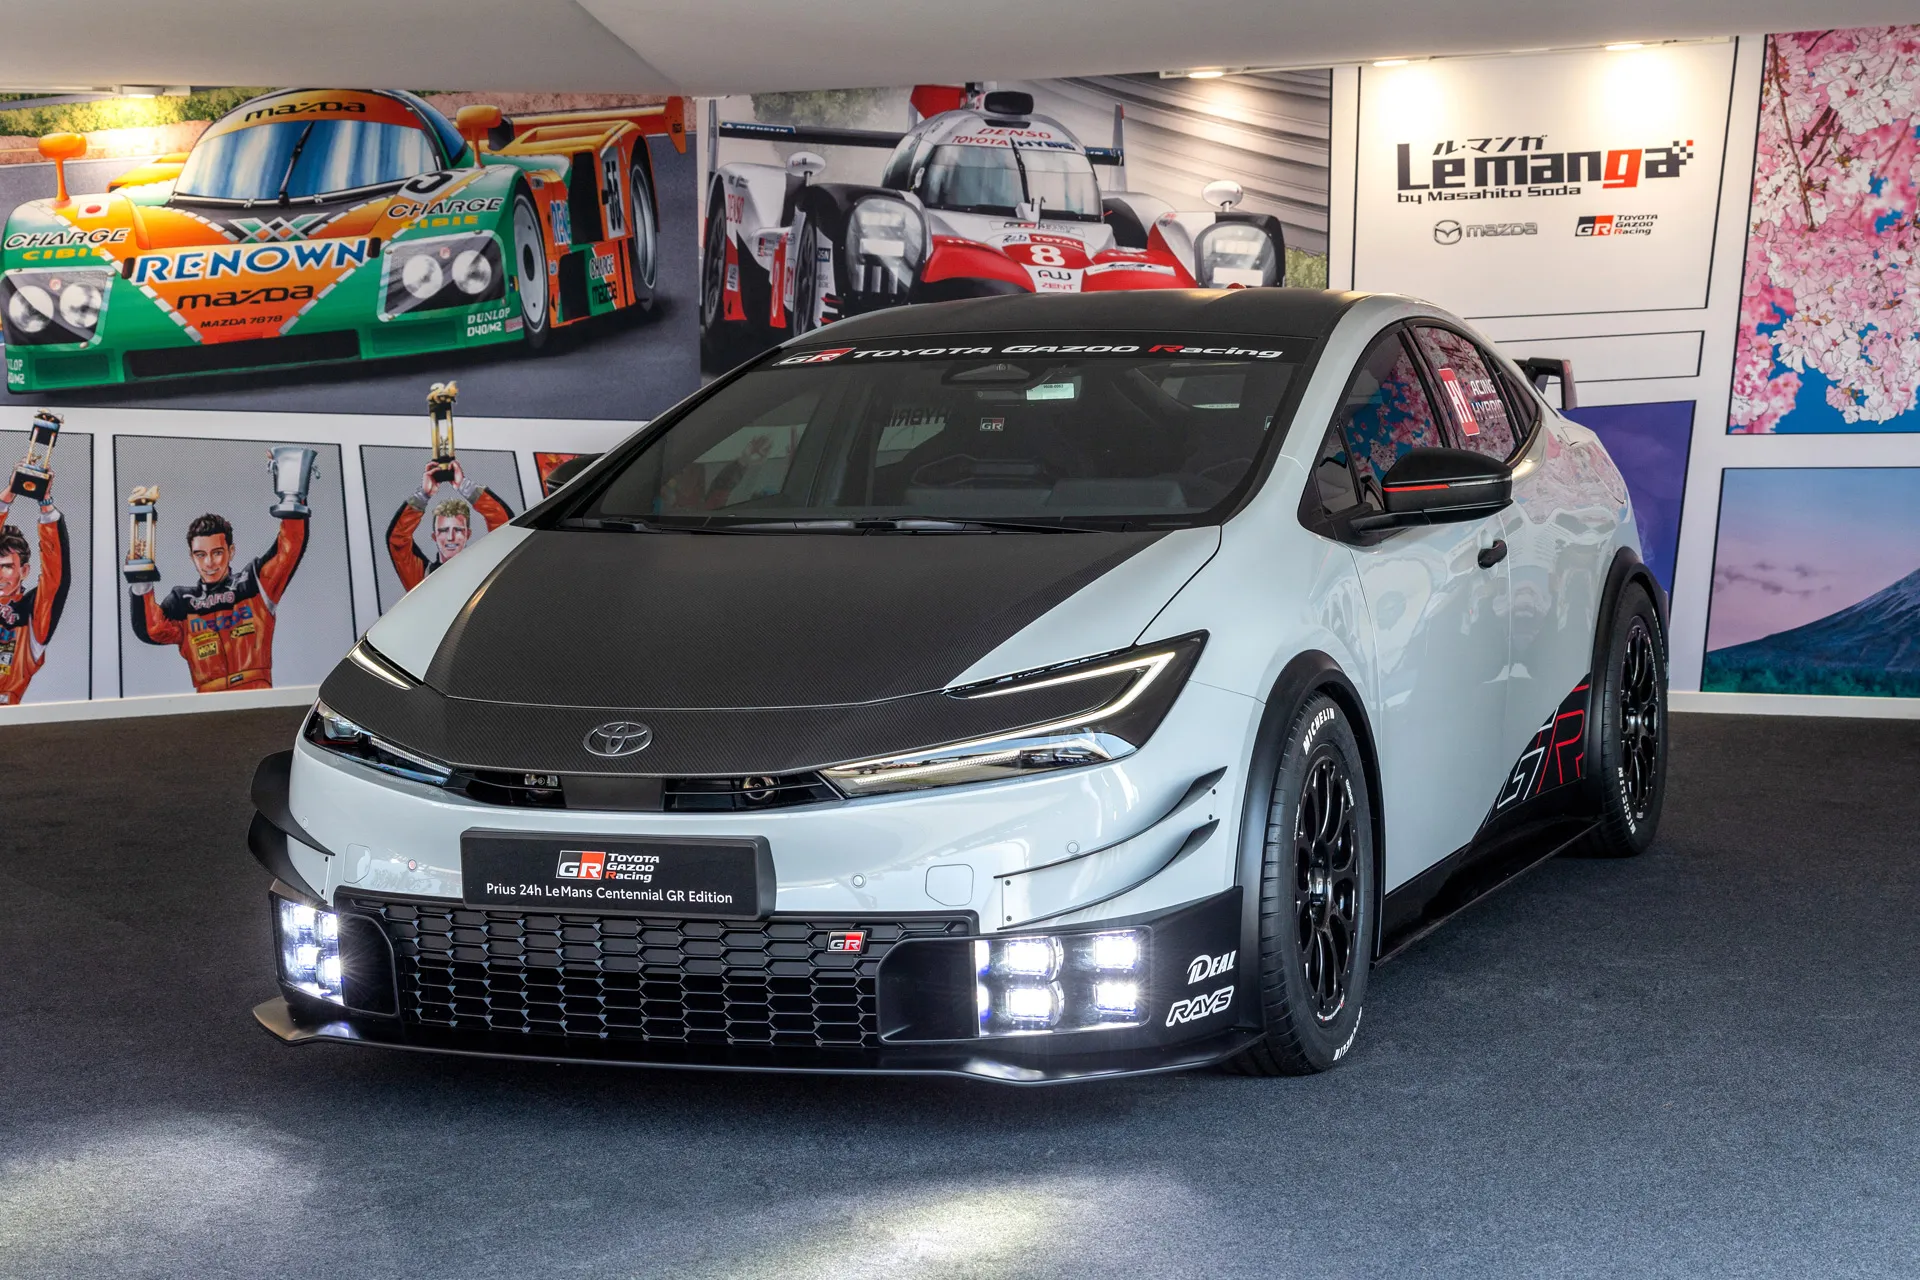 Gazoo Racing built a wild Toyota Prius to celebrate Le Mans